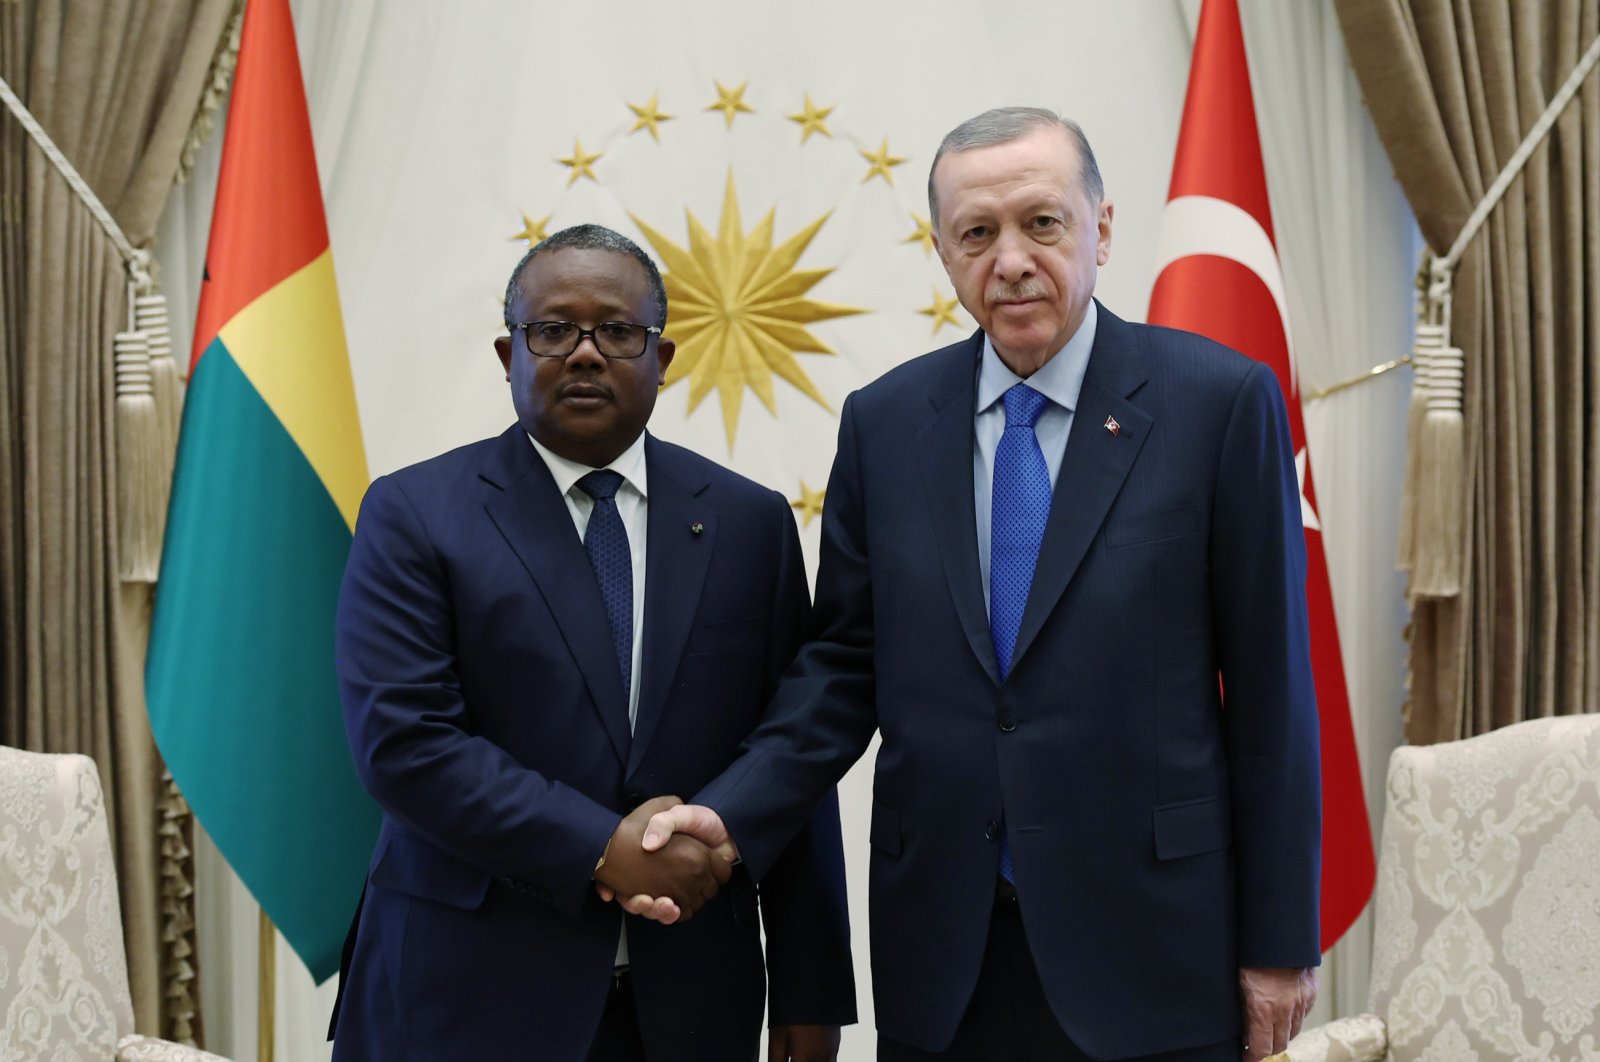 President Recep Tayyip Erdoğan (R) shakes hands with Guinea-Bissau’s President Sissoco Embalo (L) ahead of a meeting in the capital Ankara, Türkiye, March 8, 2023. (AA Photo)